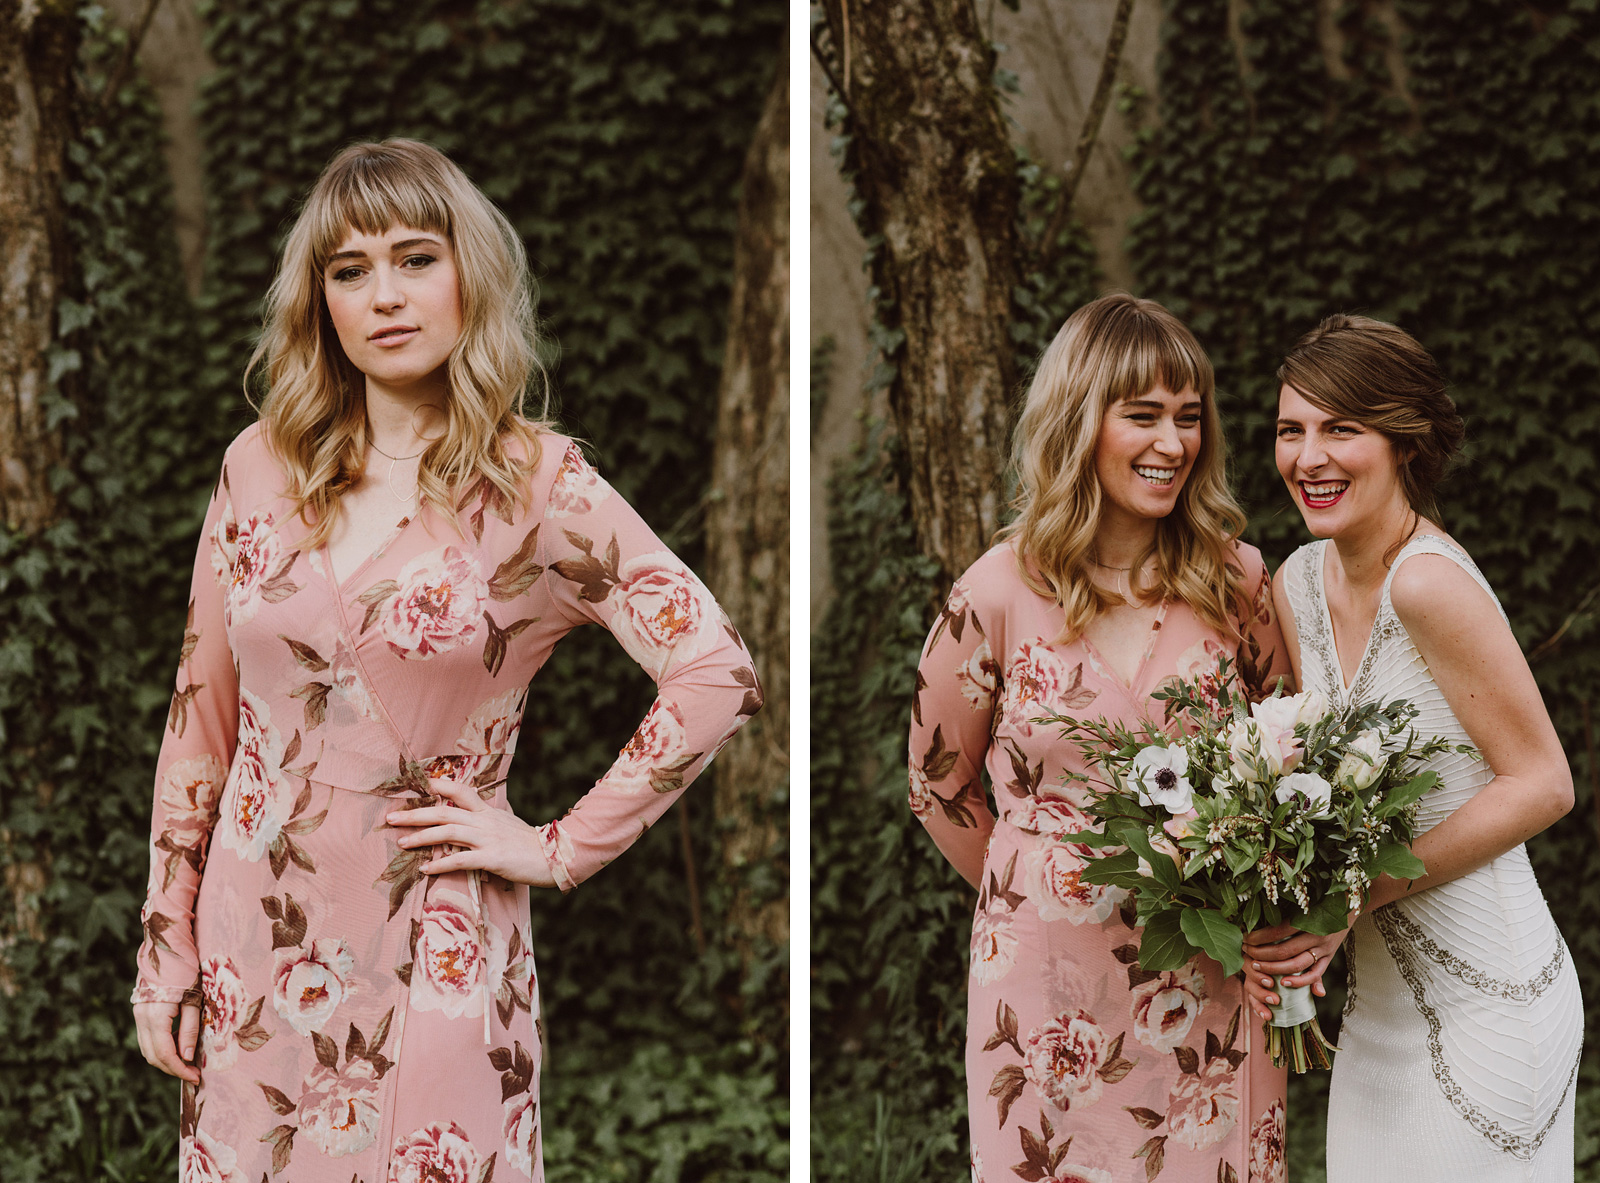 Portland Bridal Photography - Bride and bridesmaid giggling in a backyard